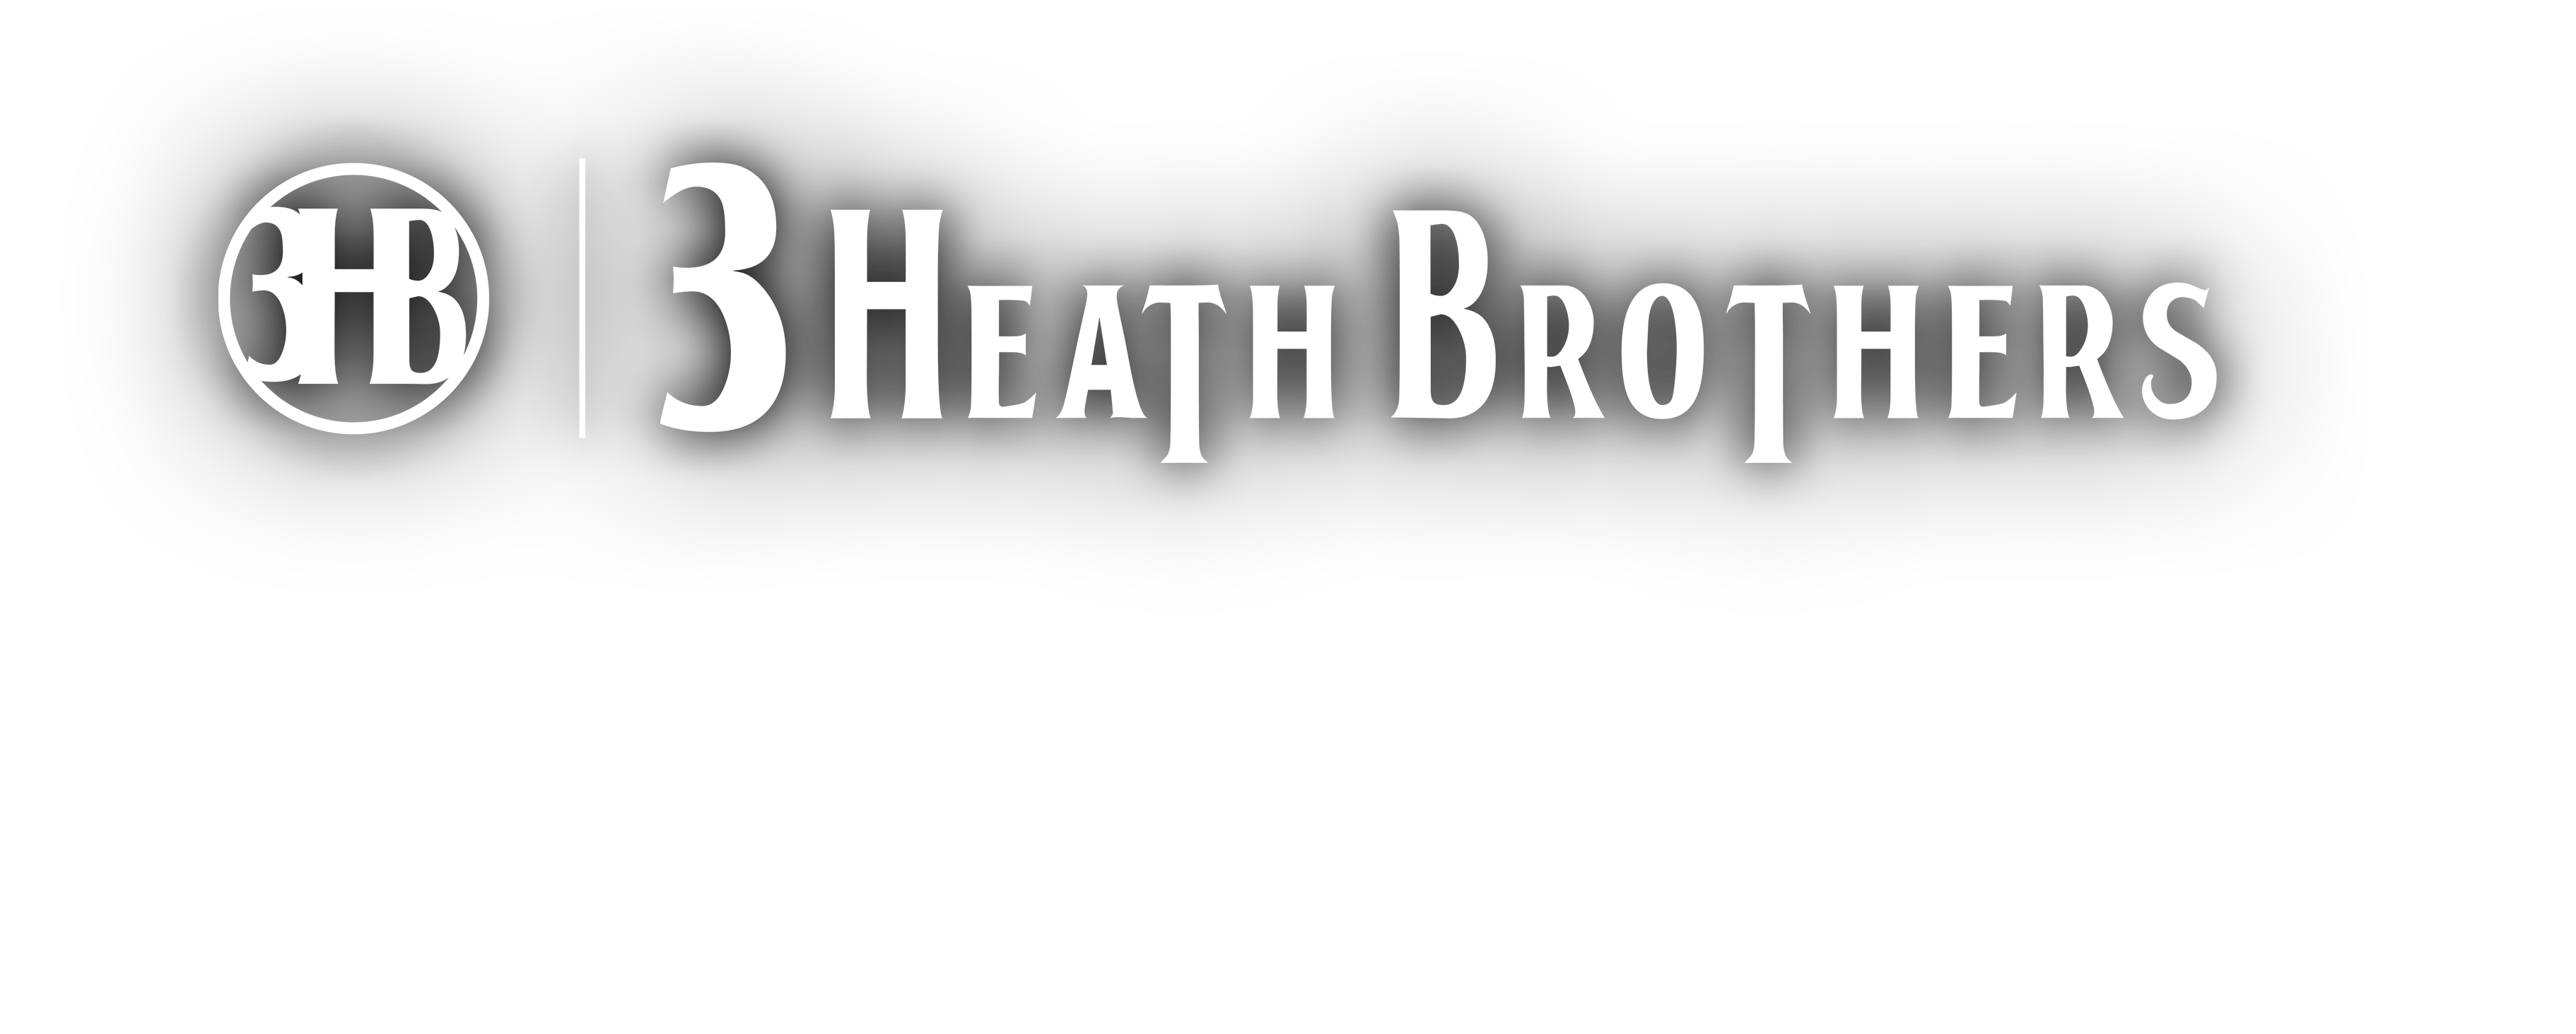 3 Heath Brothers Apparel